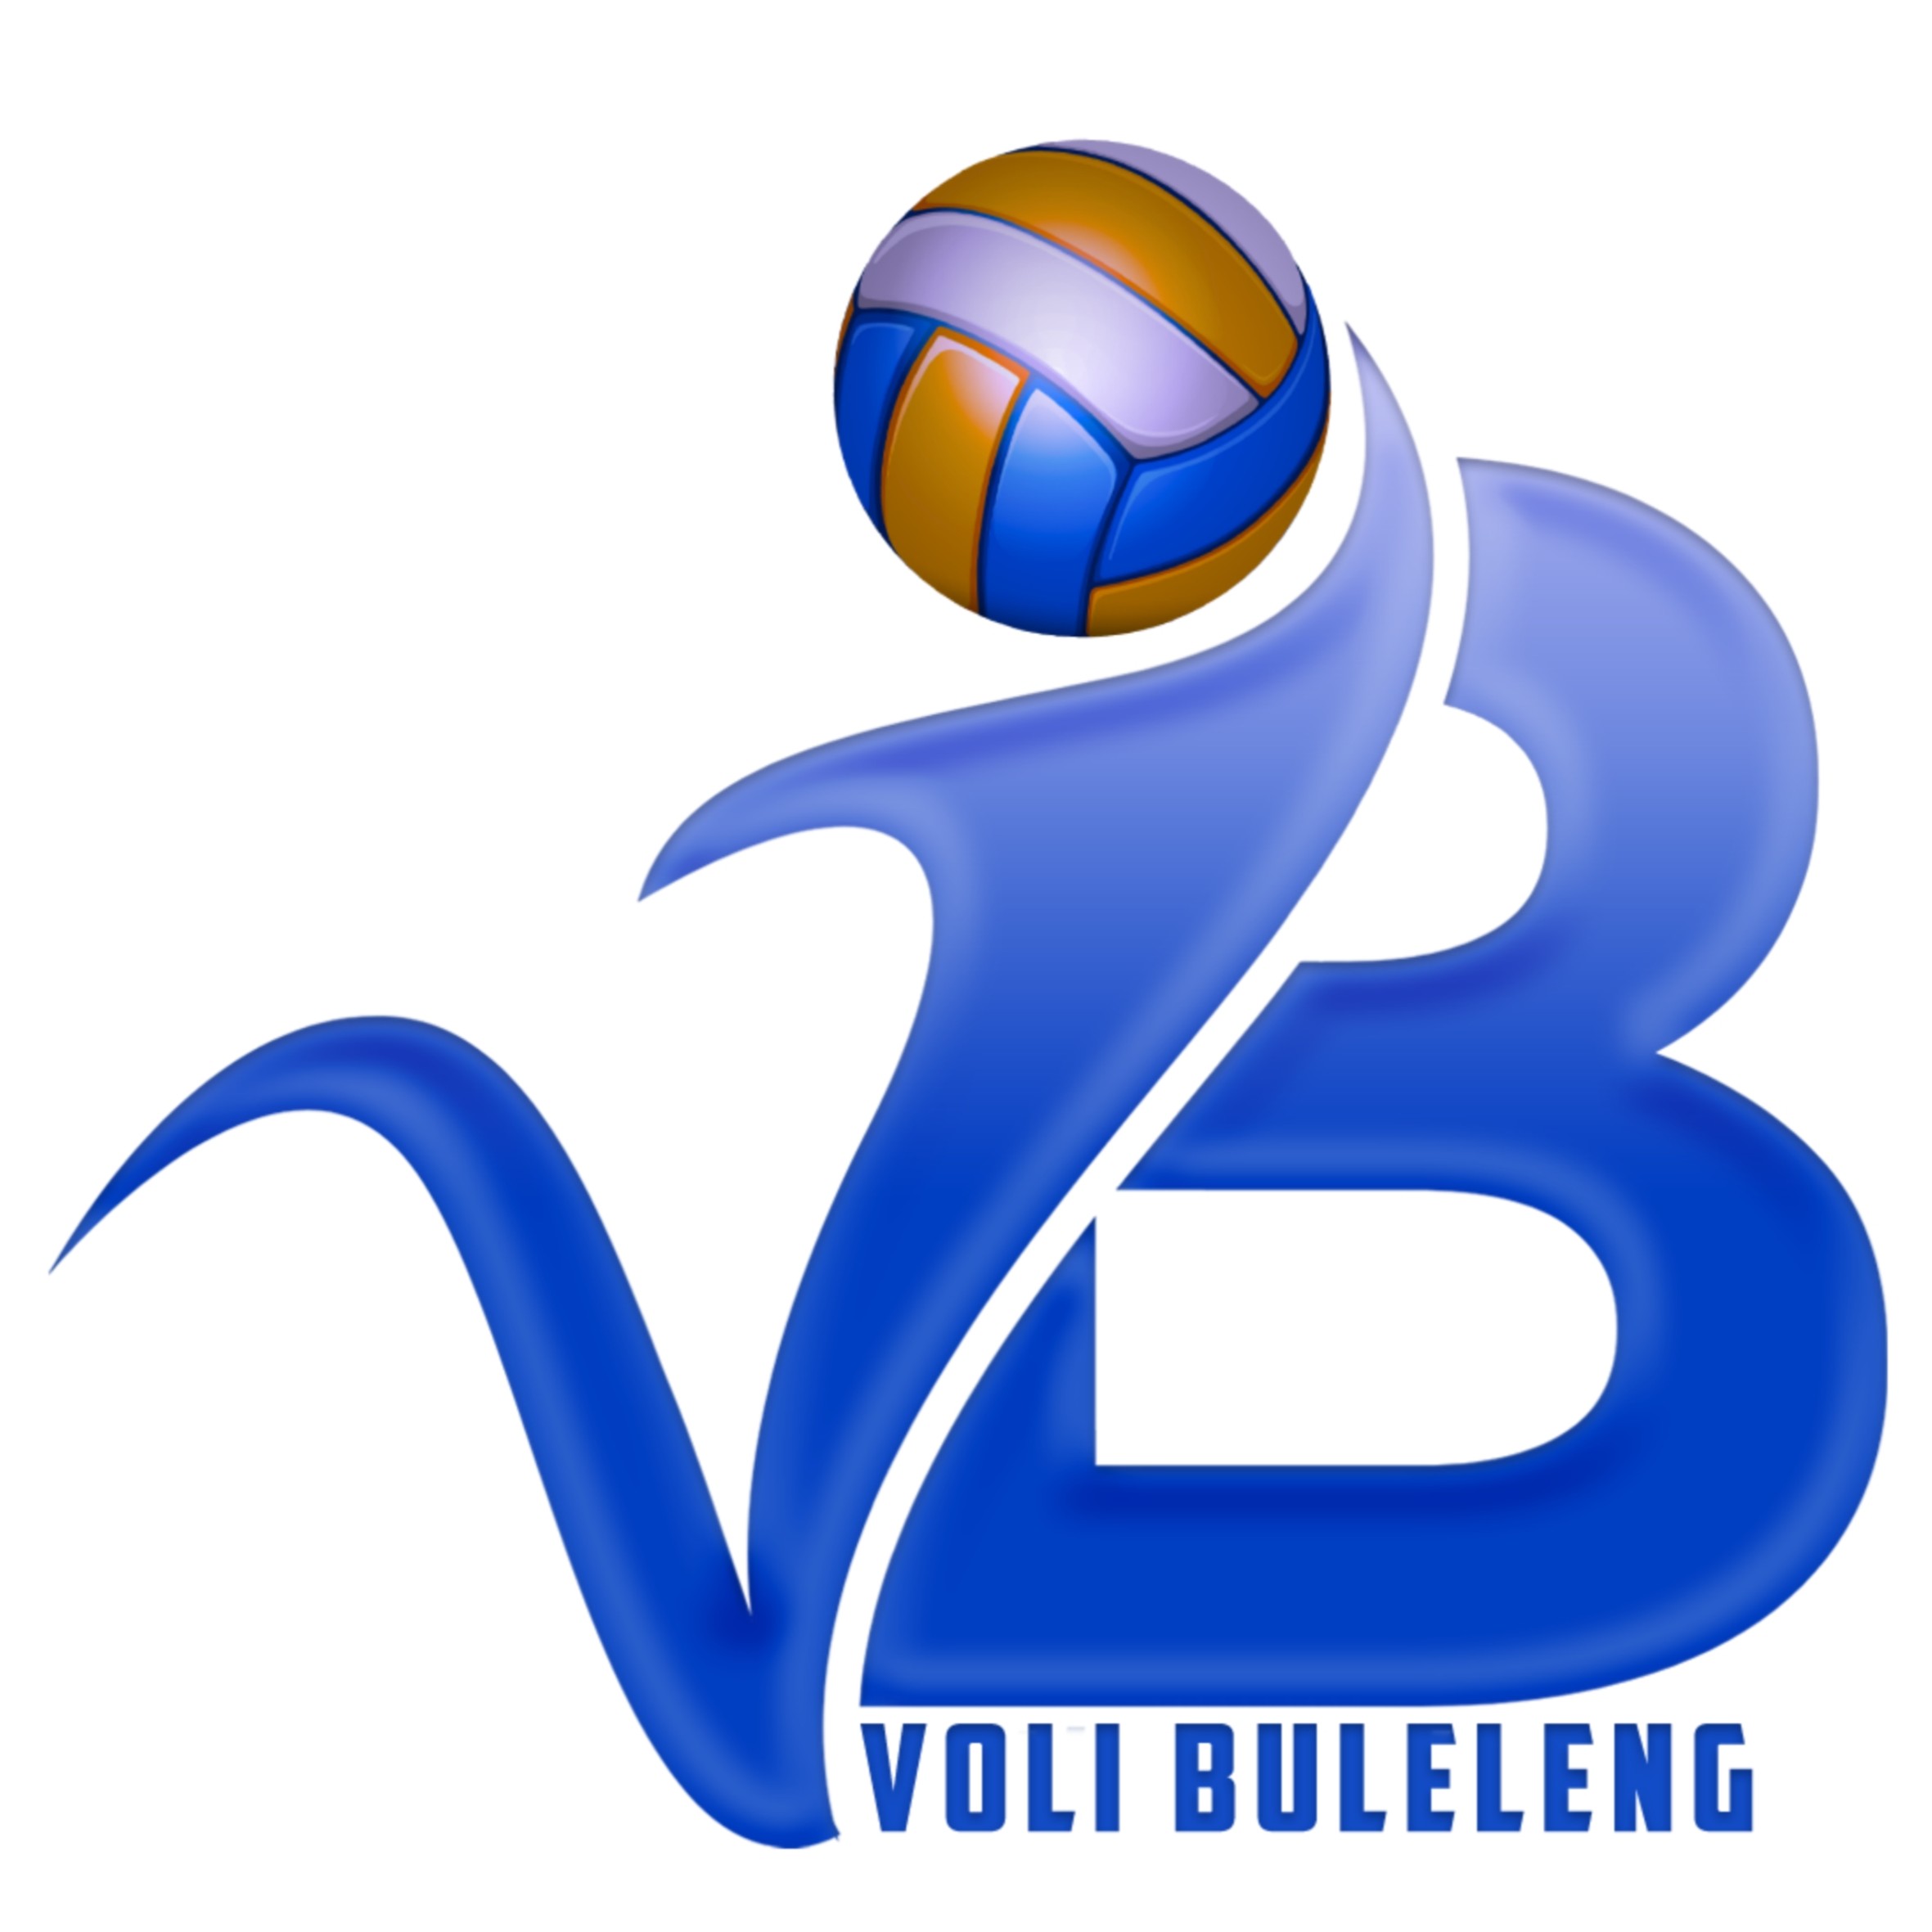 Voli Buleleng's profile image